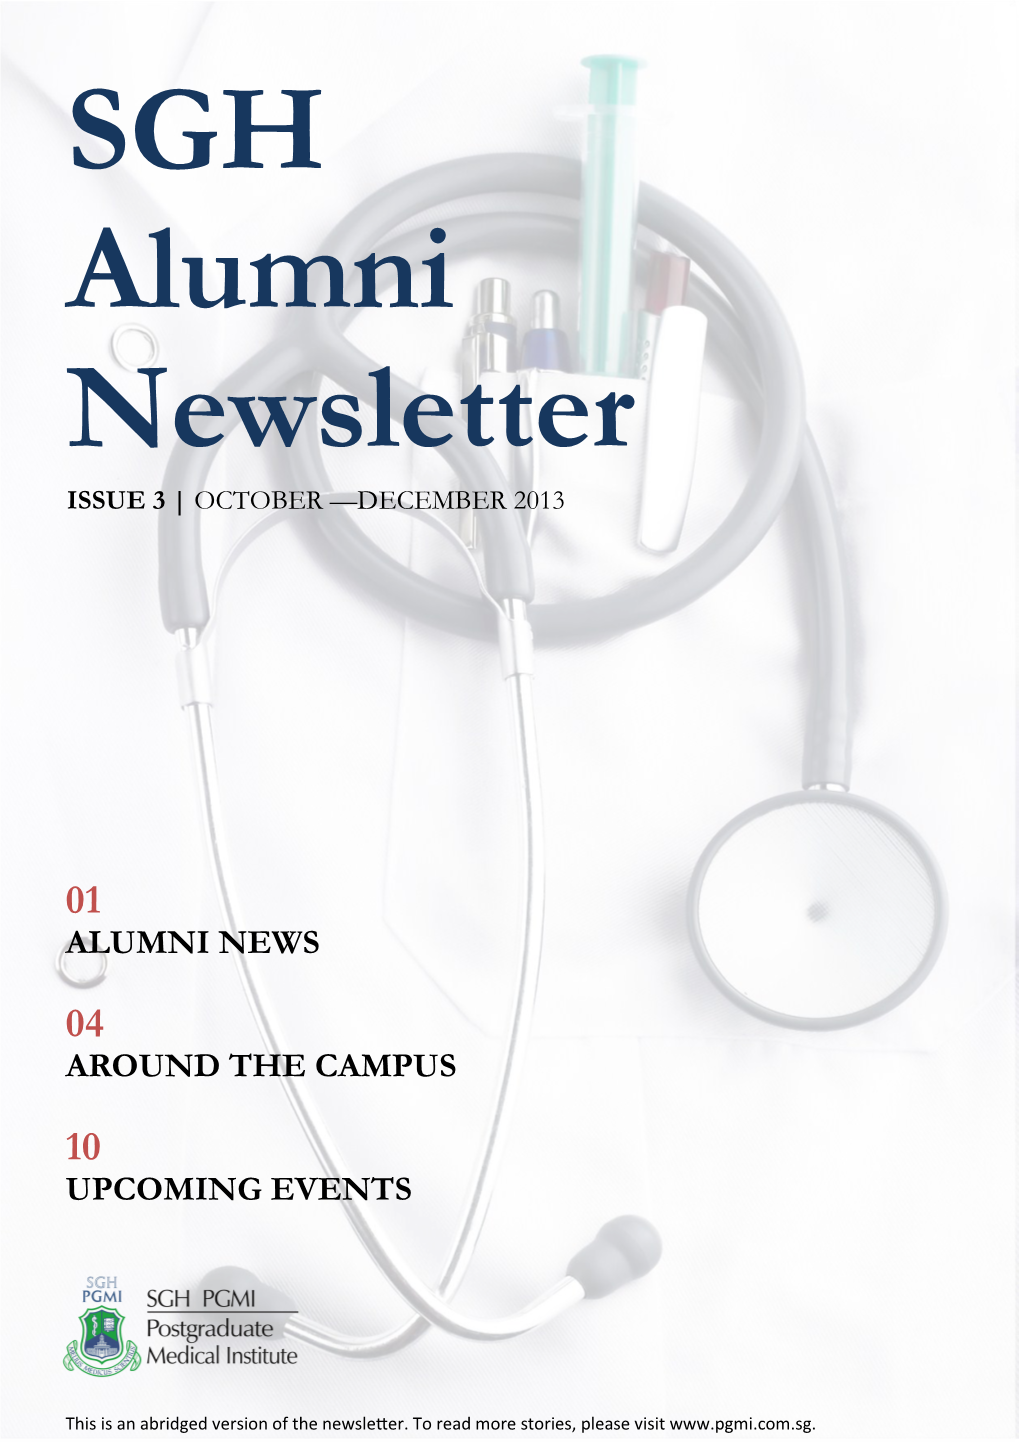 SGH Alumni Newsletter ISSUE 3 | OCTOBER —DECEMBER 2013